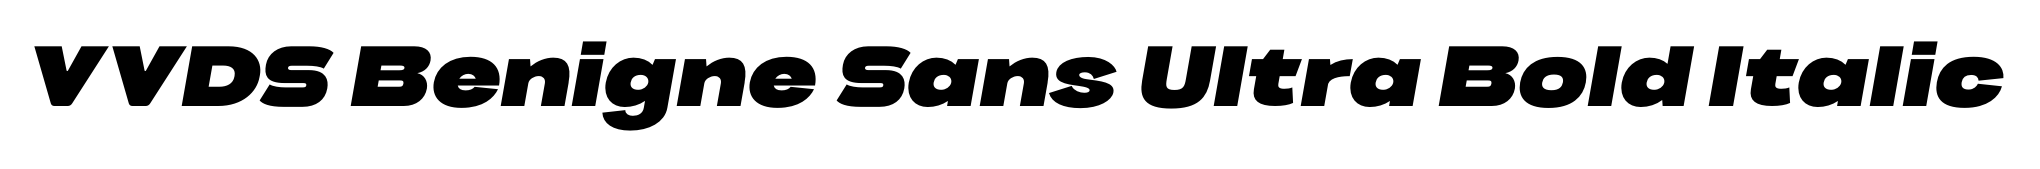 VVDS Benigne Sans Ultra Bold Italic image